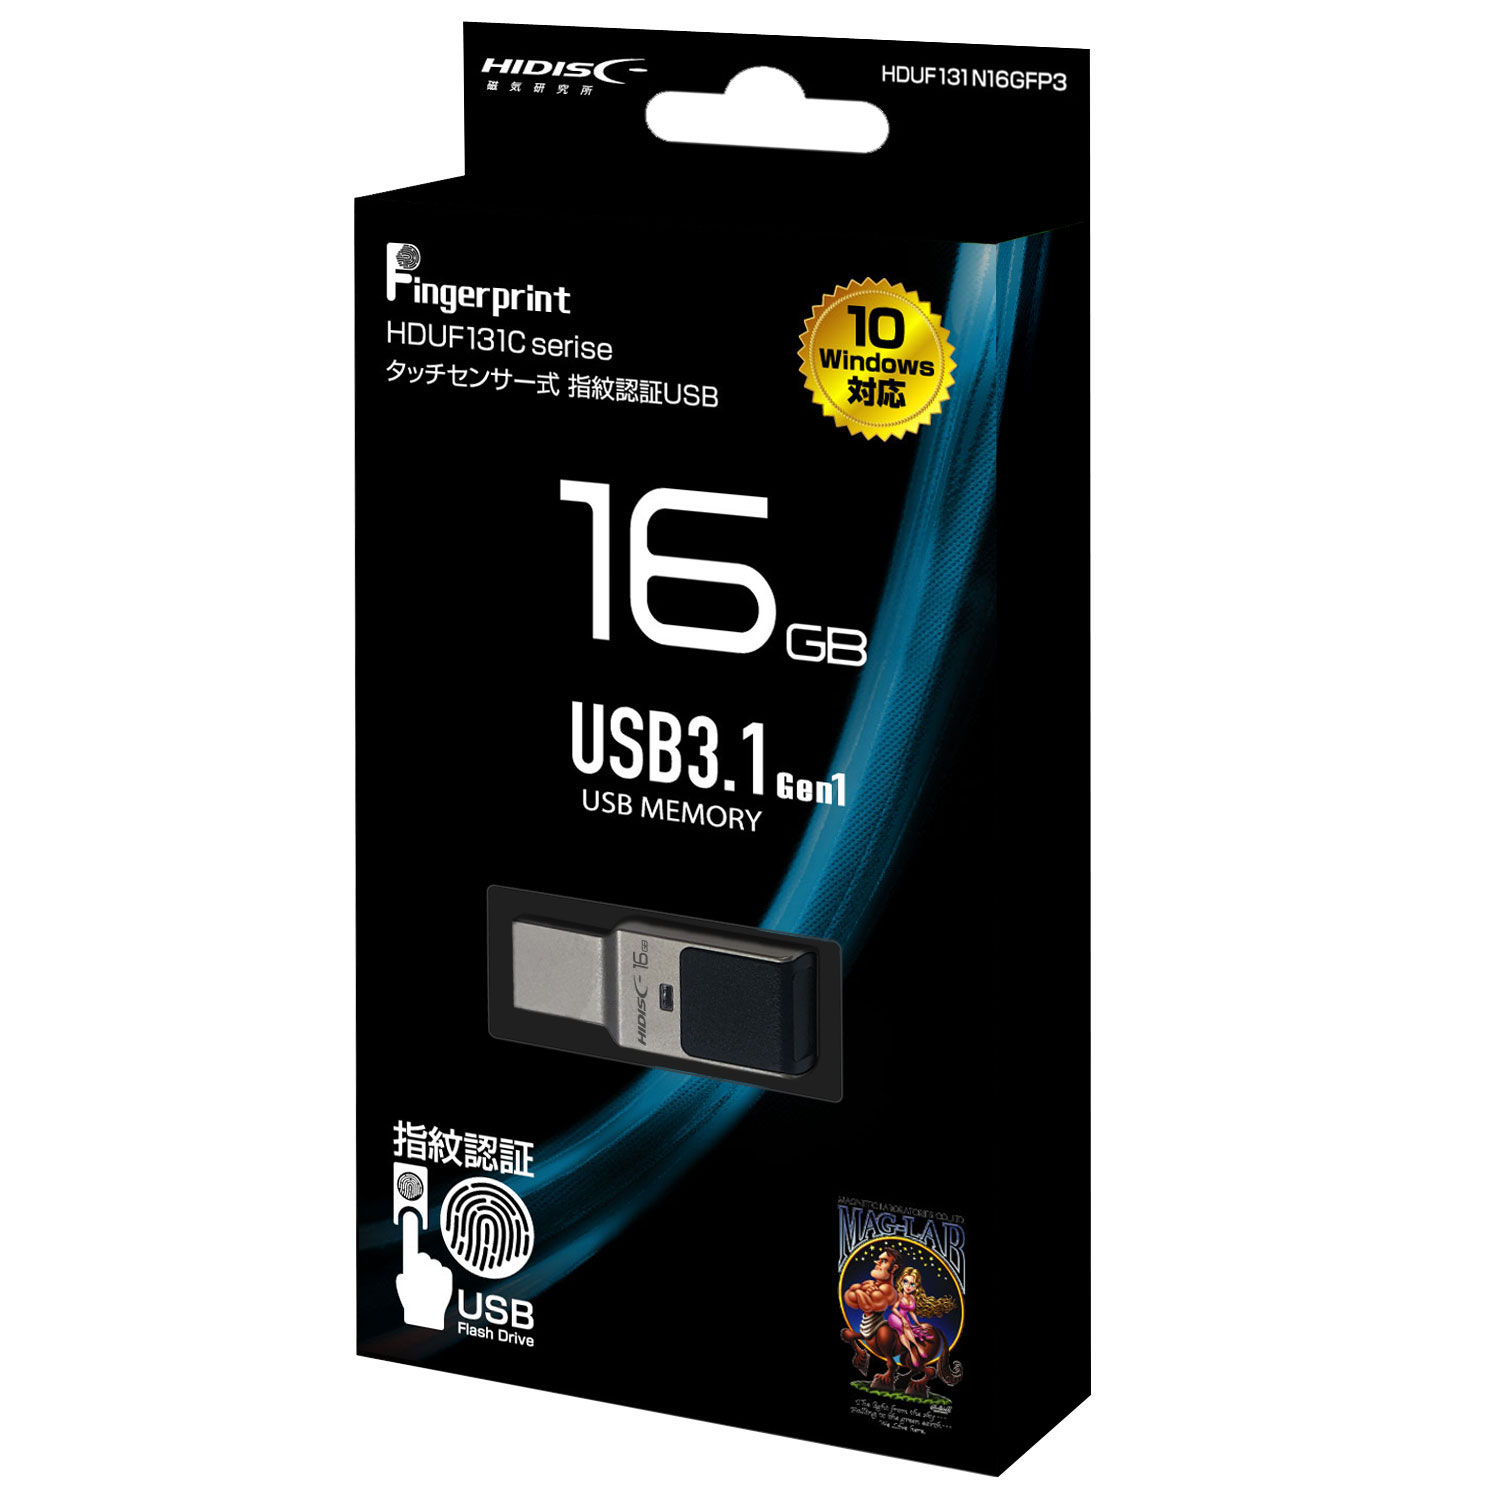 HIDISC USB 3.1, Gen1 タッチセンター式指紋認証, 暗号化機能付きUSBフラッシュドライブ 16GB  HDUF131N16GFP3